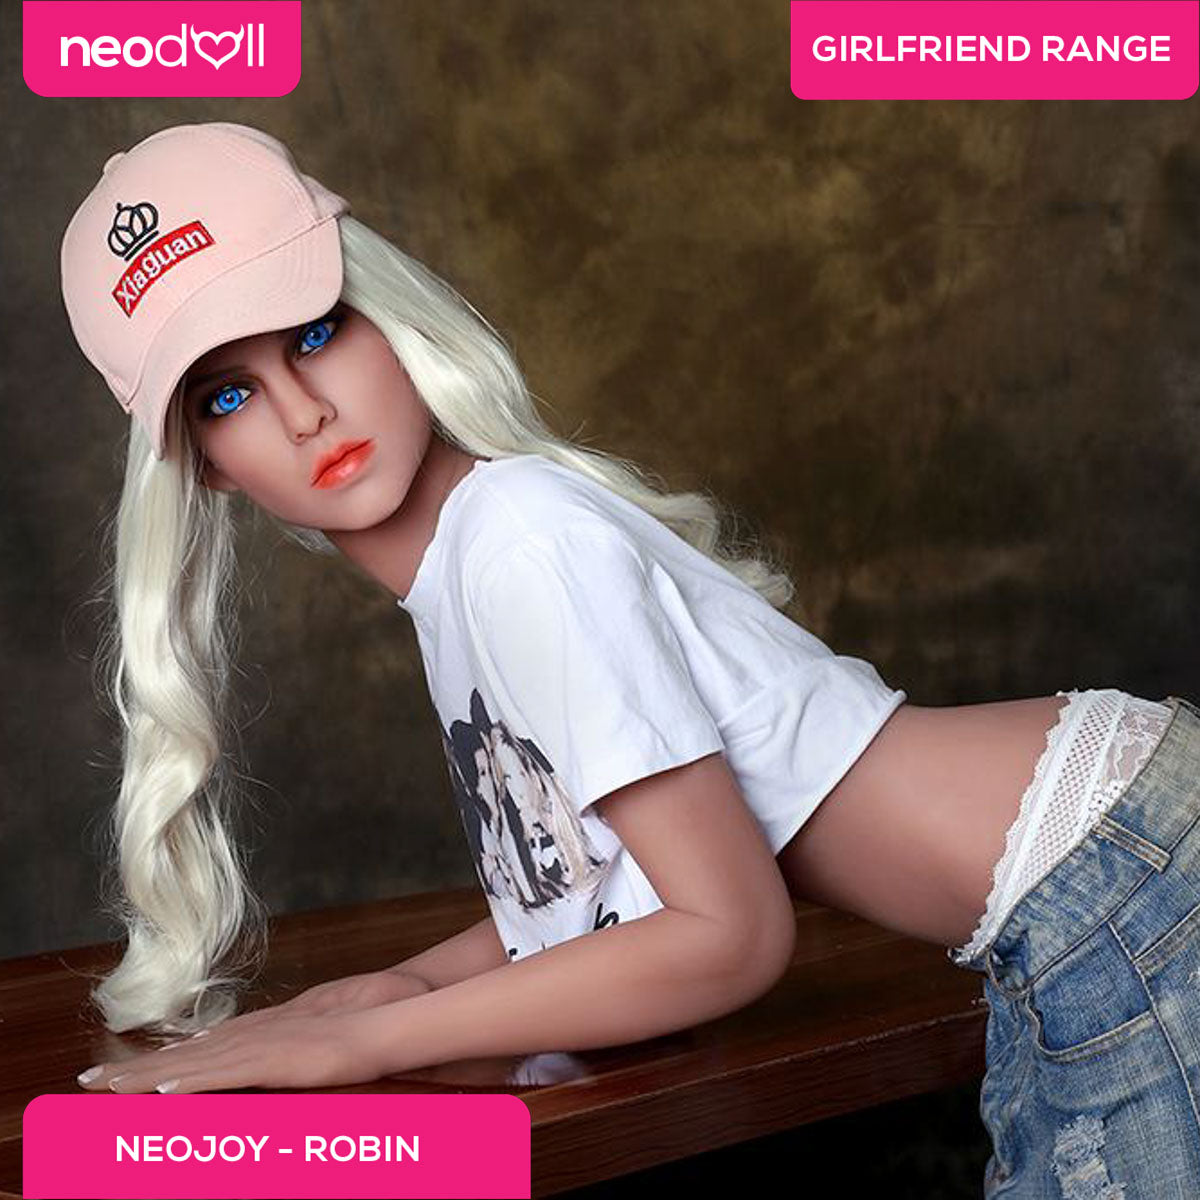 Neodoll Girlfriend - Robin - Realistic Sex Doll - 157cm - Tan